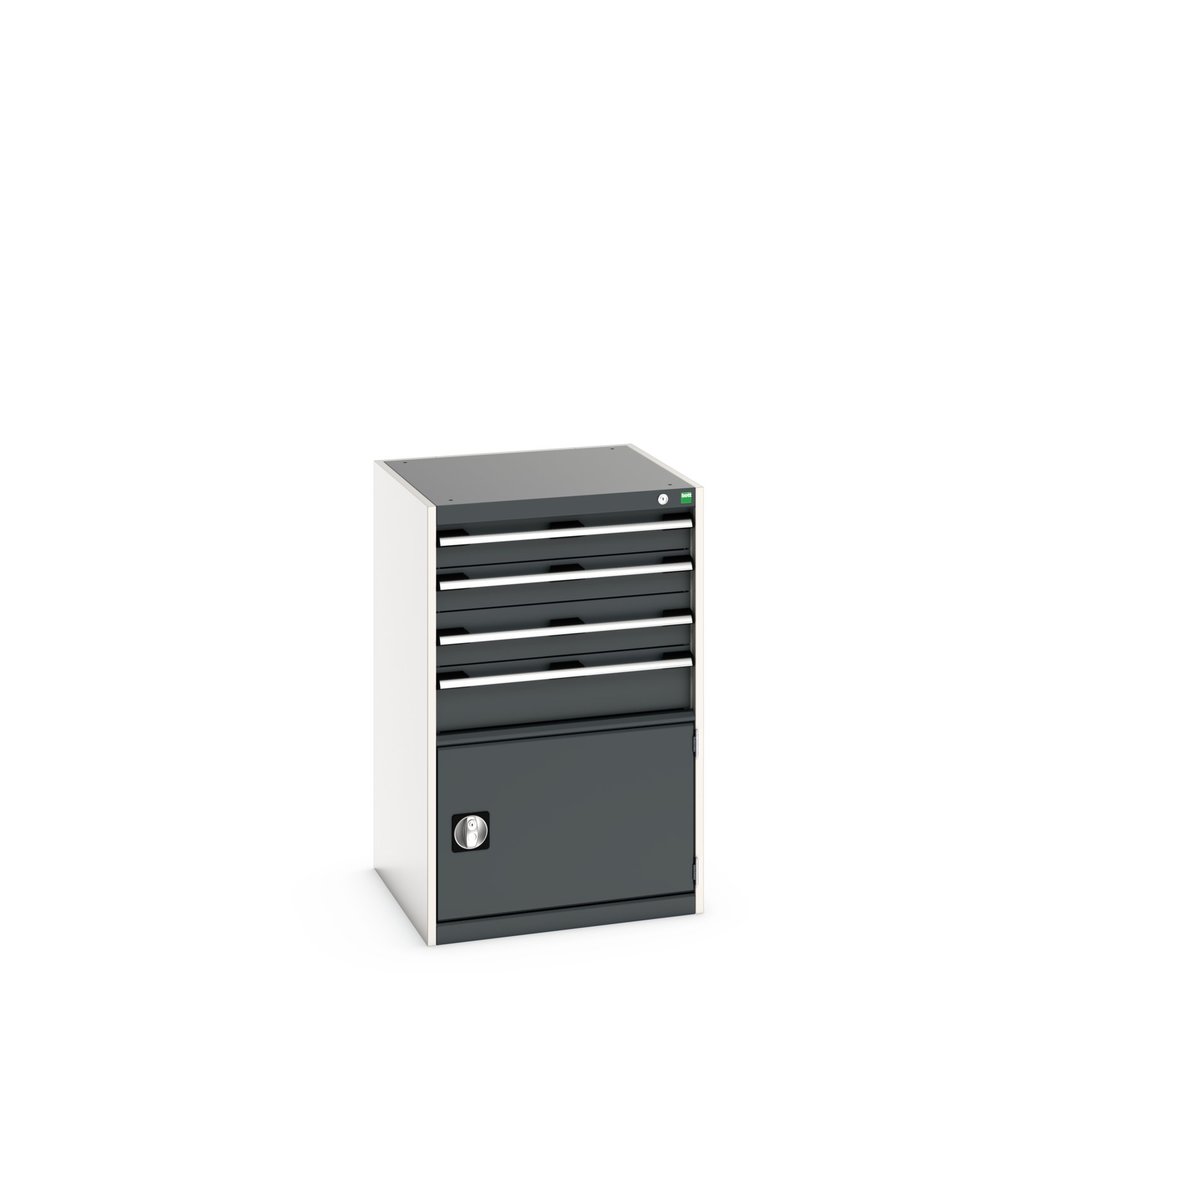 40019055. - cubio drawer cabinet